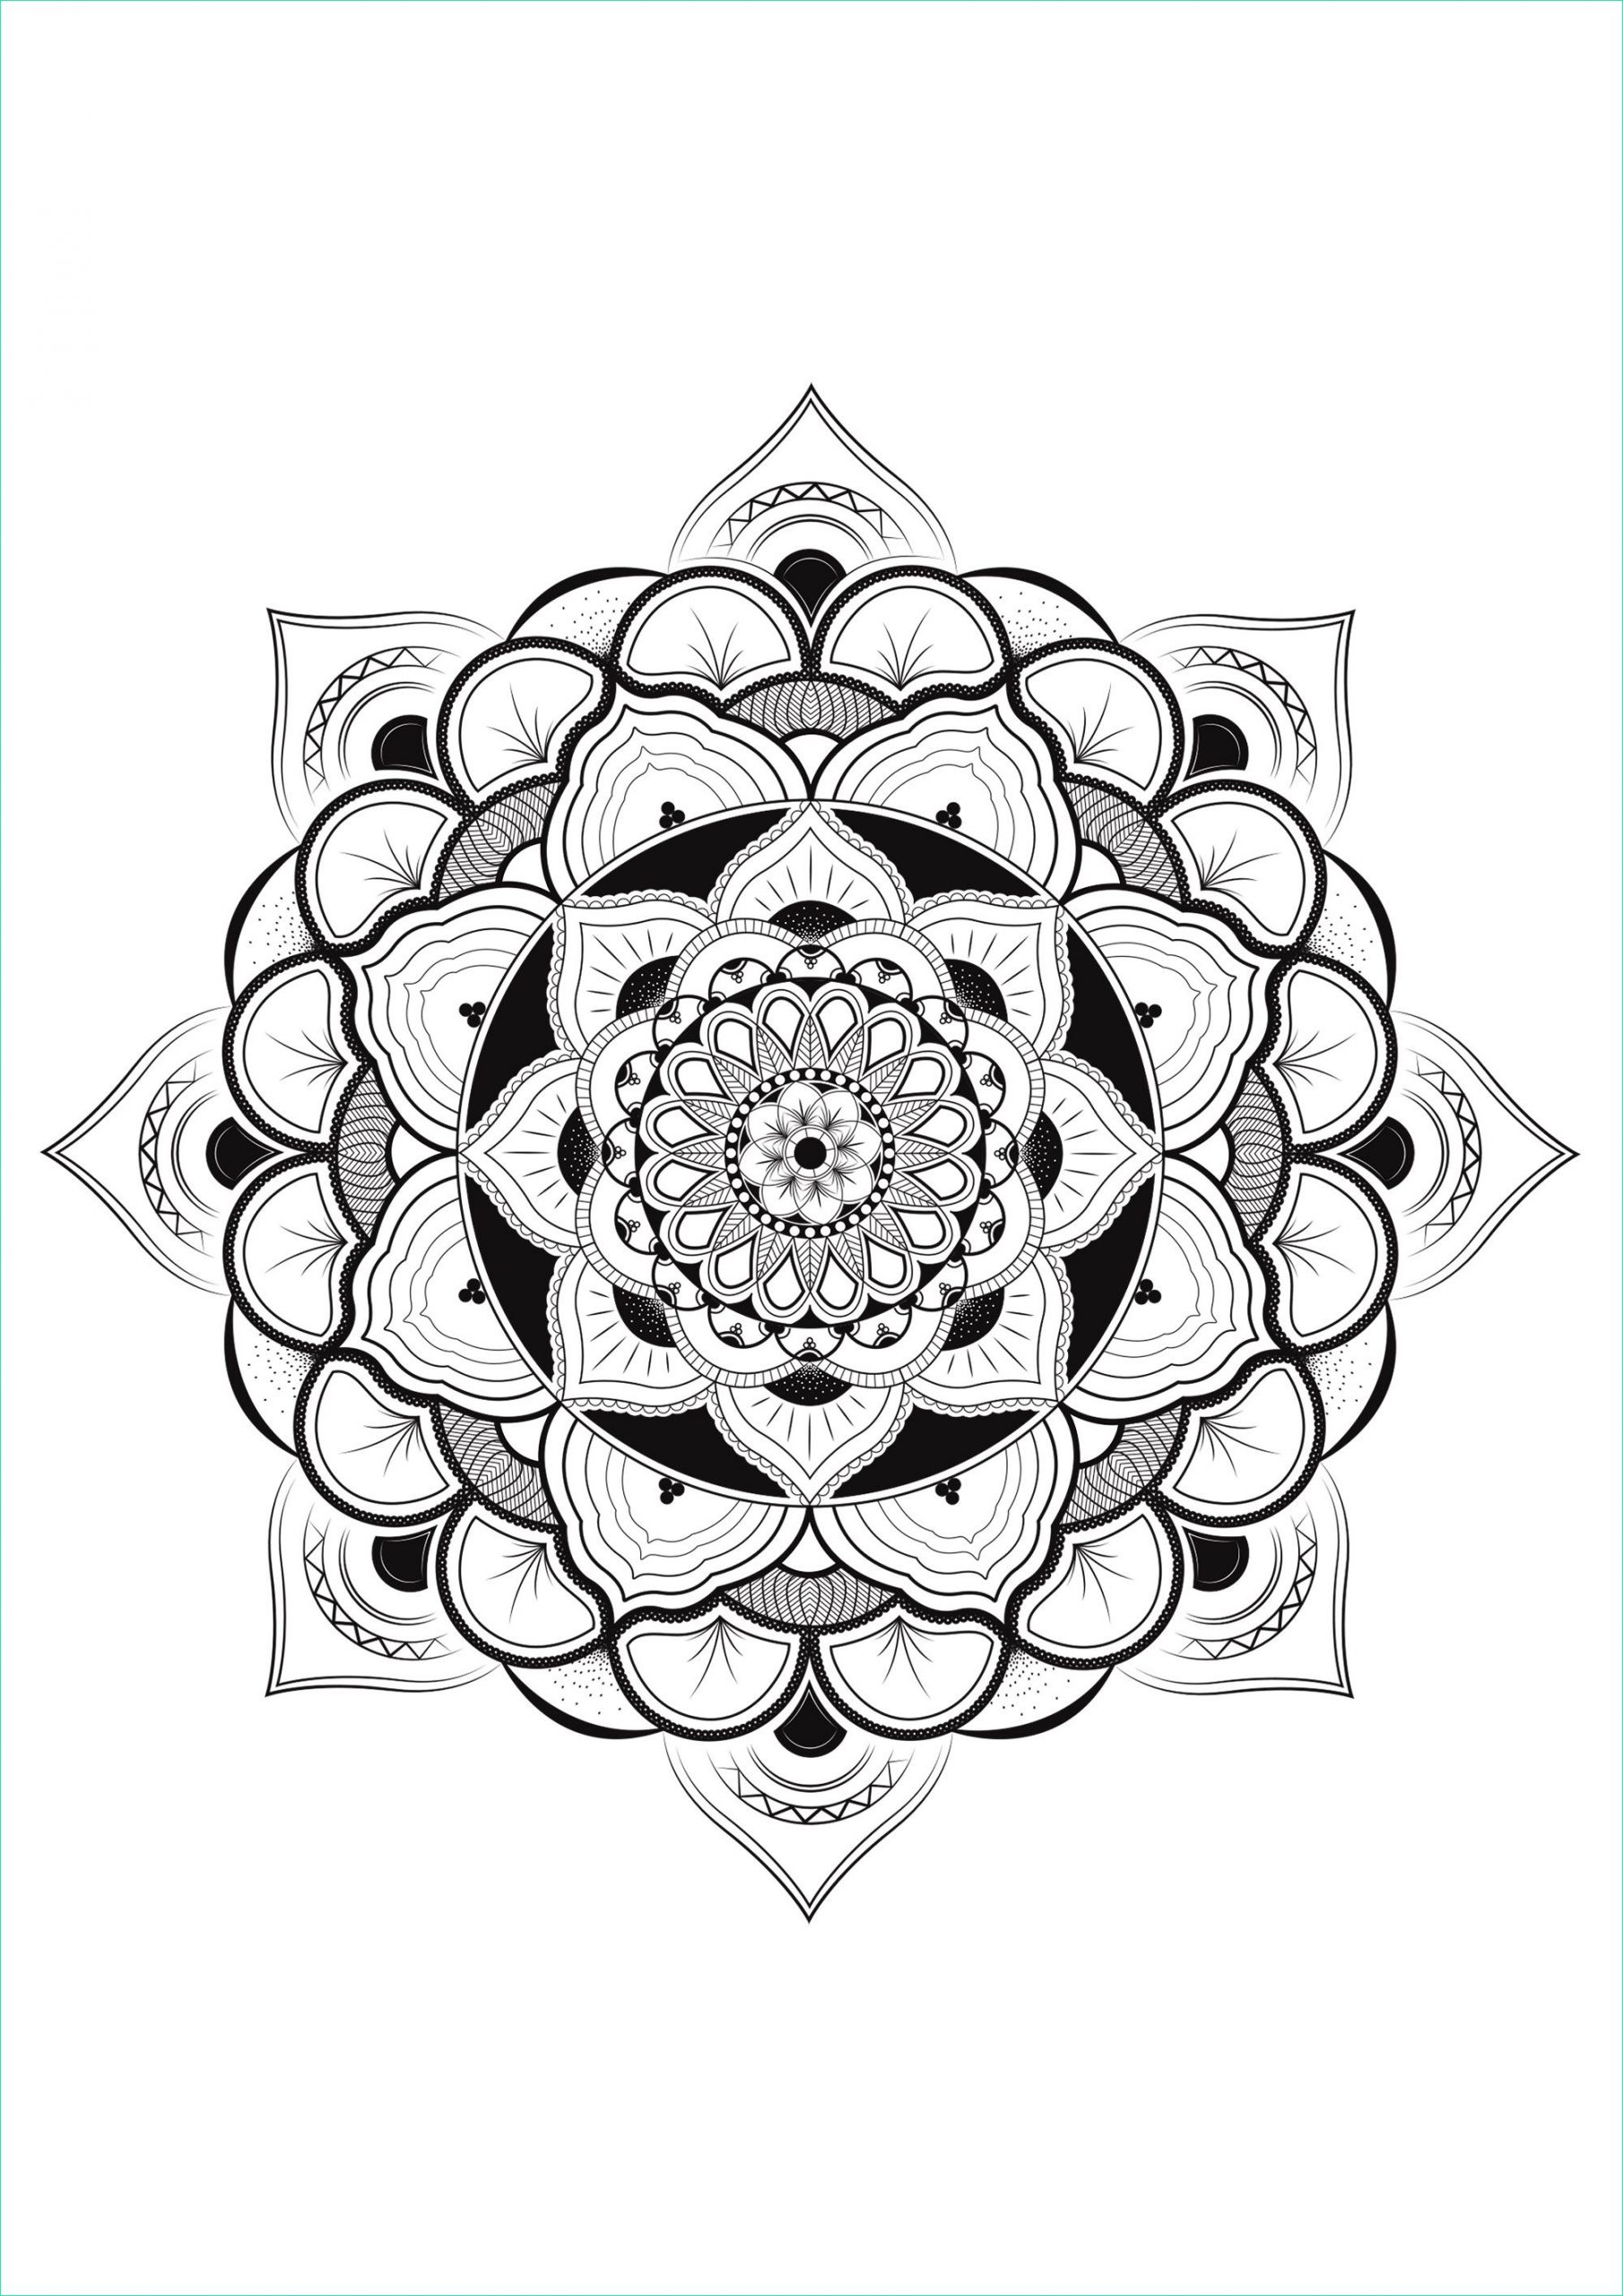 image=mandalas coloring pages flower mandala by louise 1